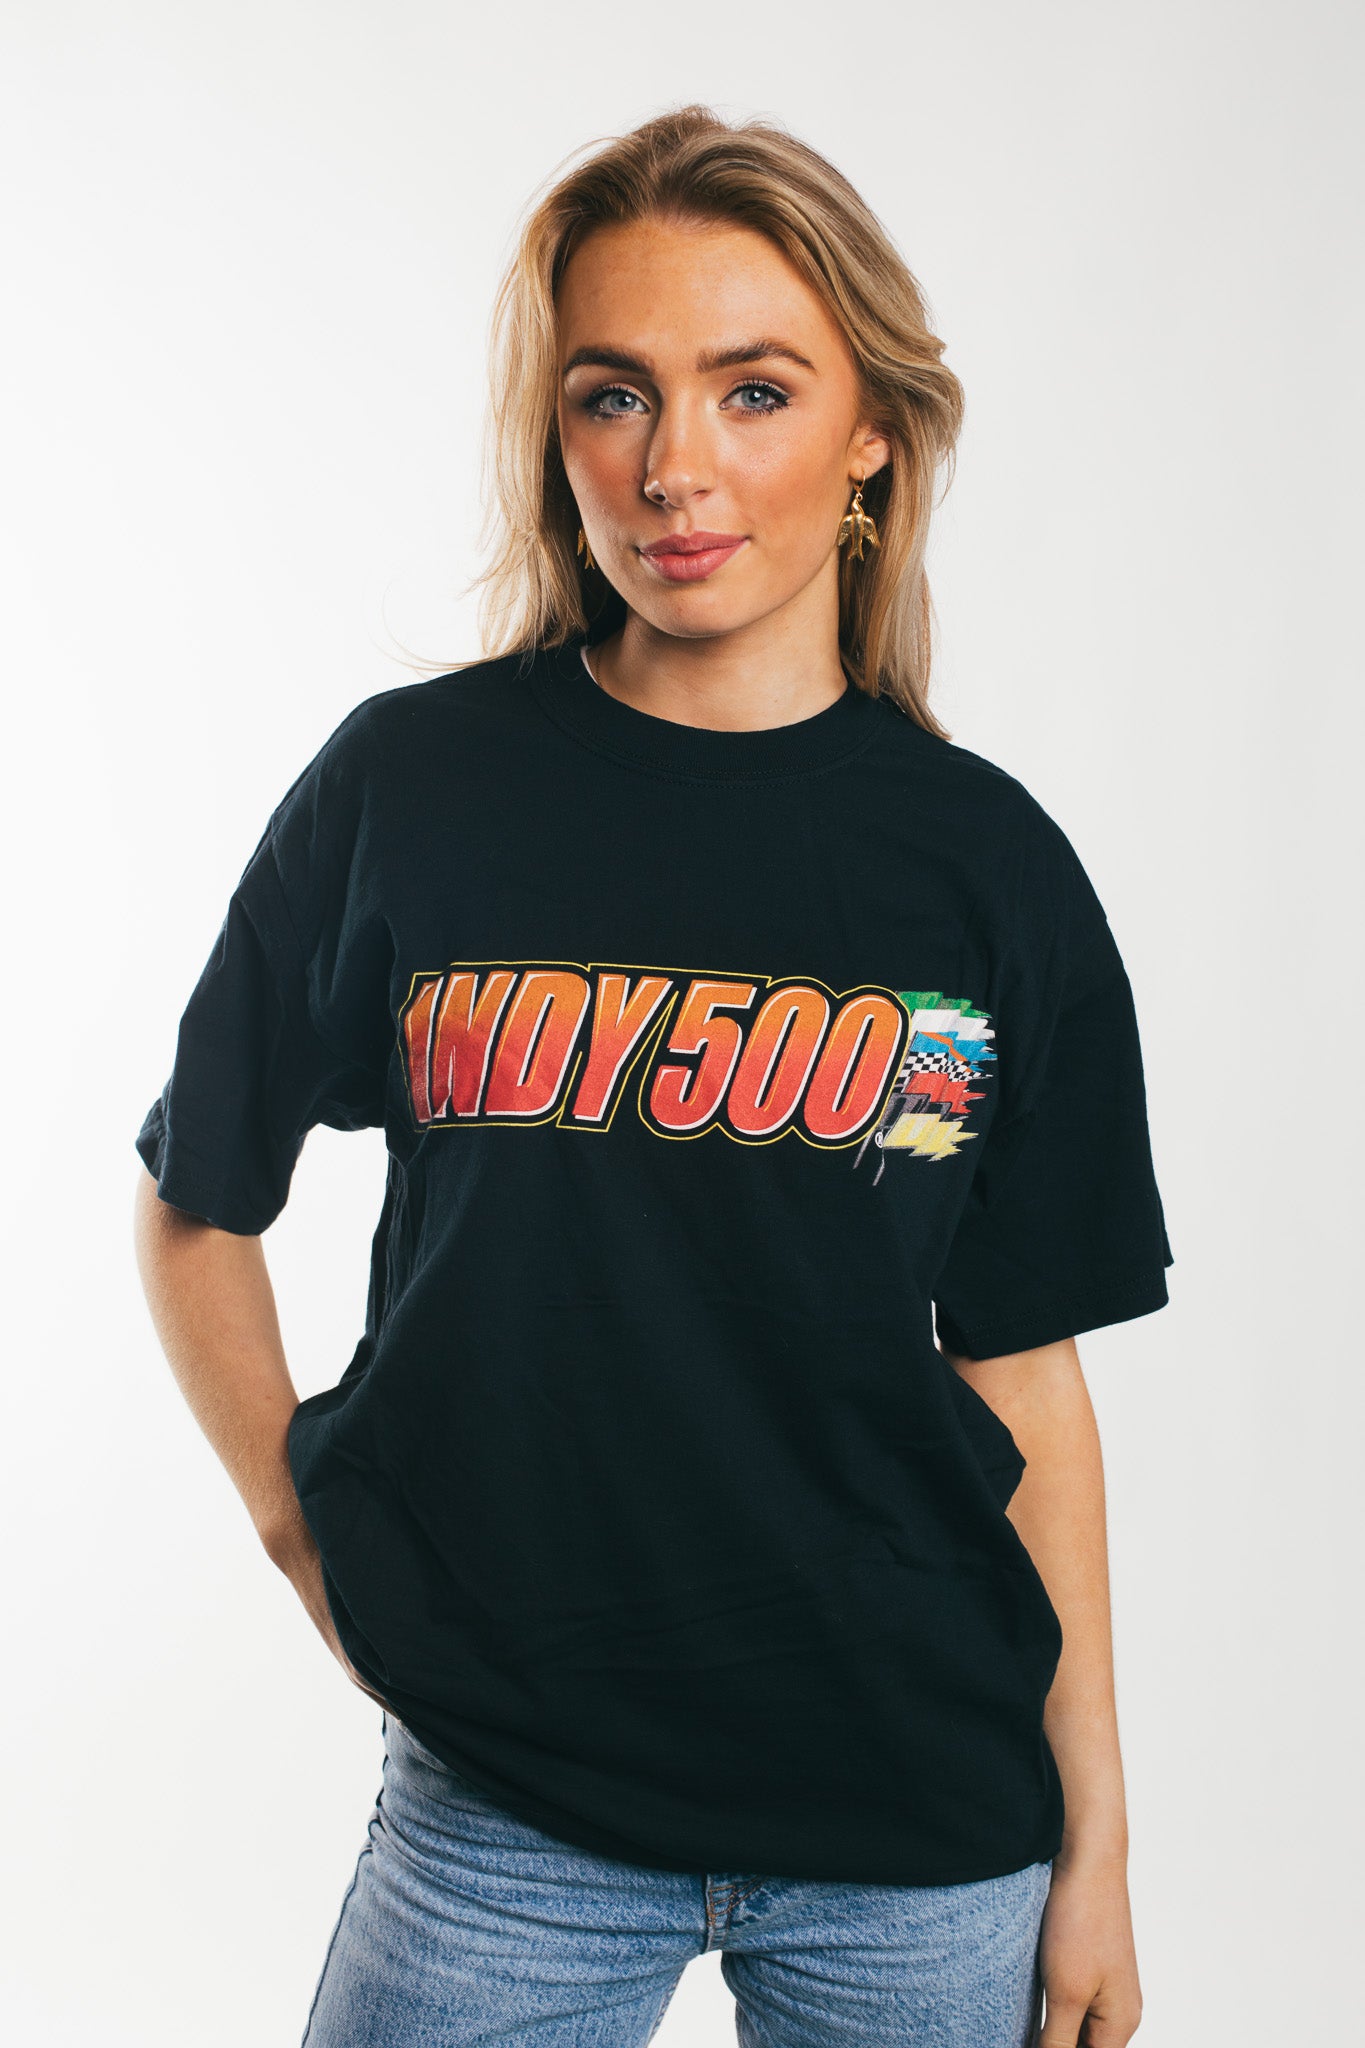 Indy500 - T-Shirt (L)